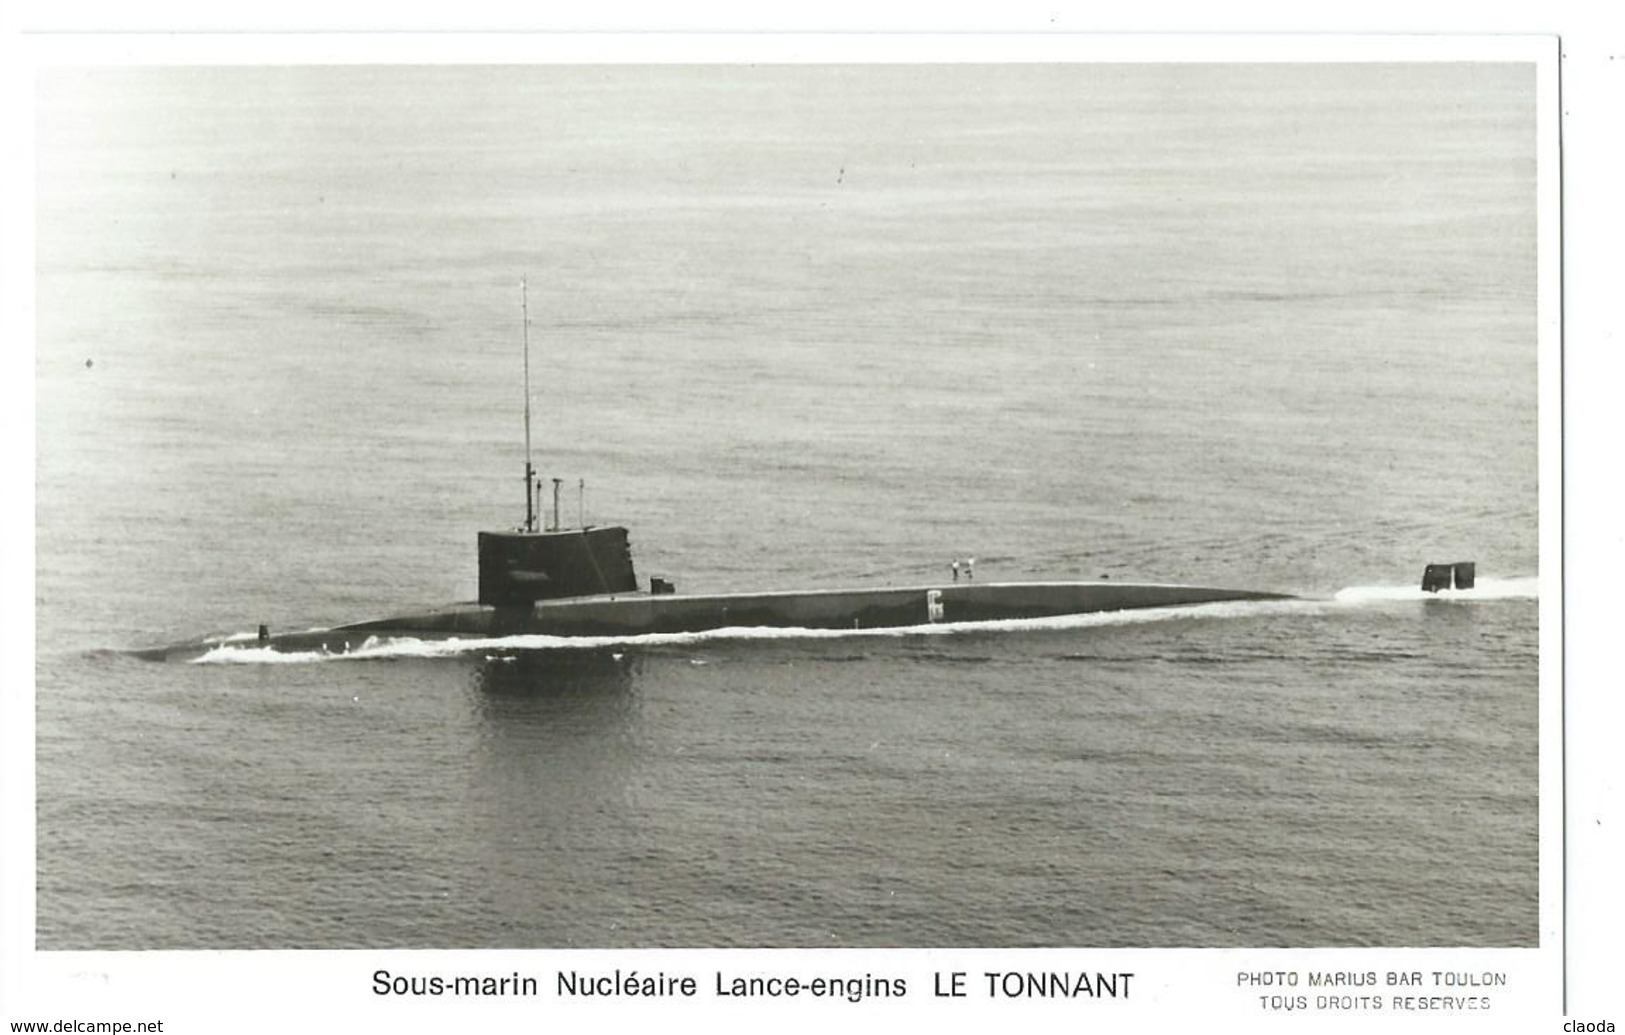 67 CP - MARIUS BAR - SNLE LE TONNANT - Sous-marins